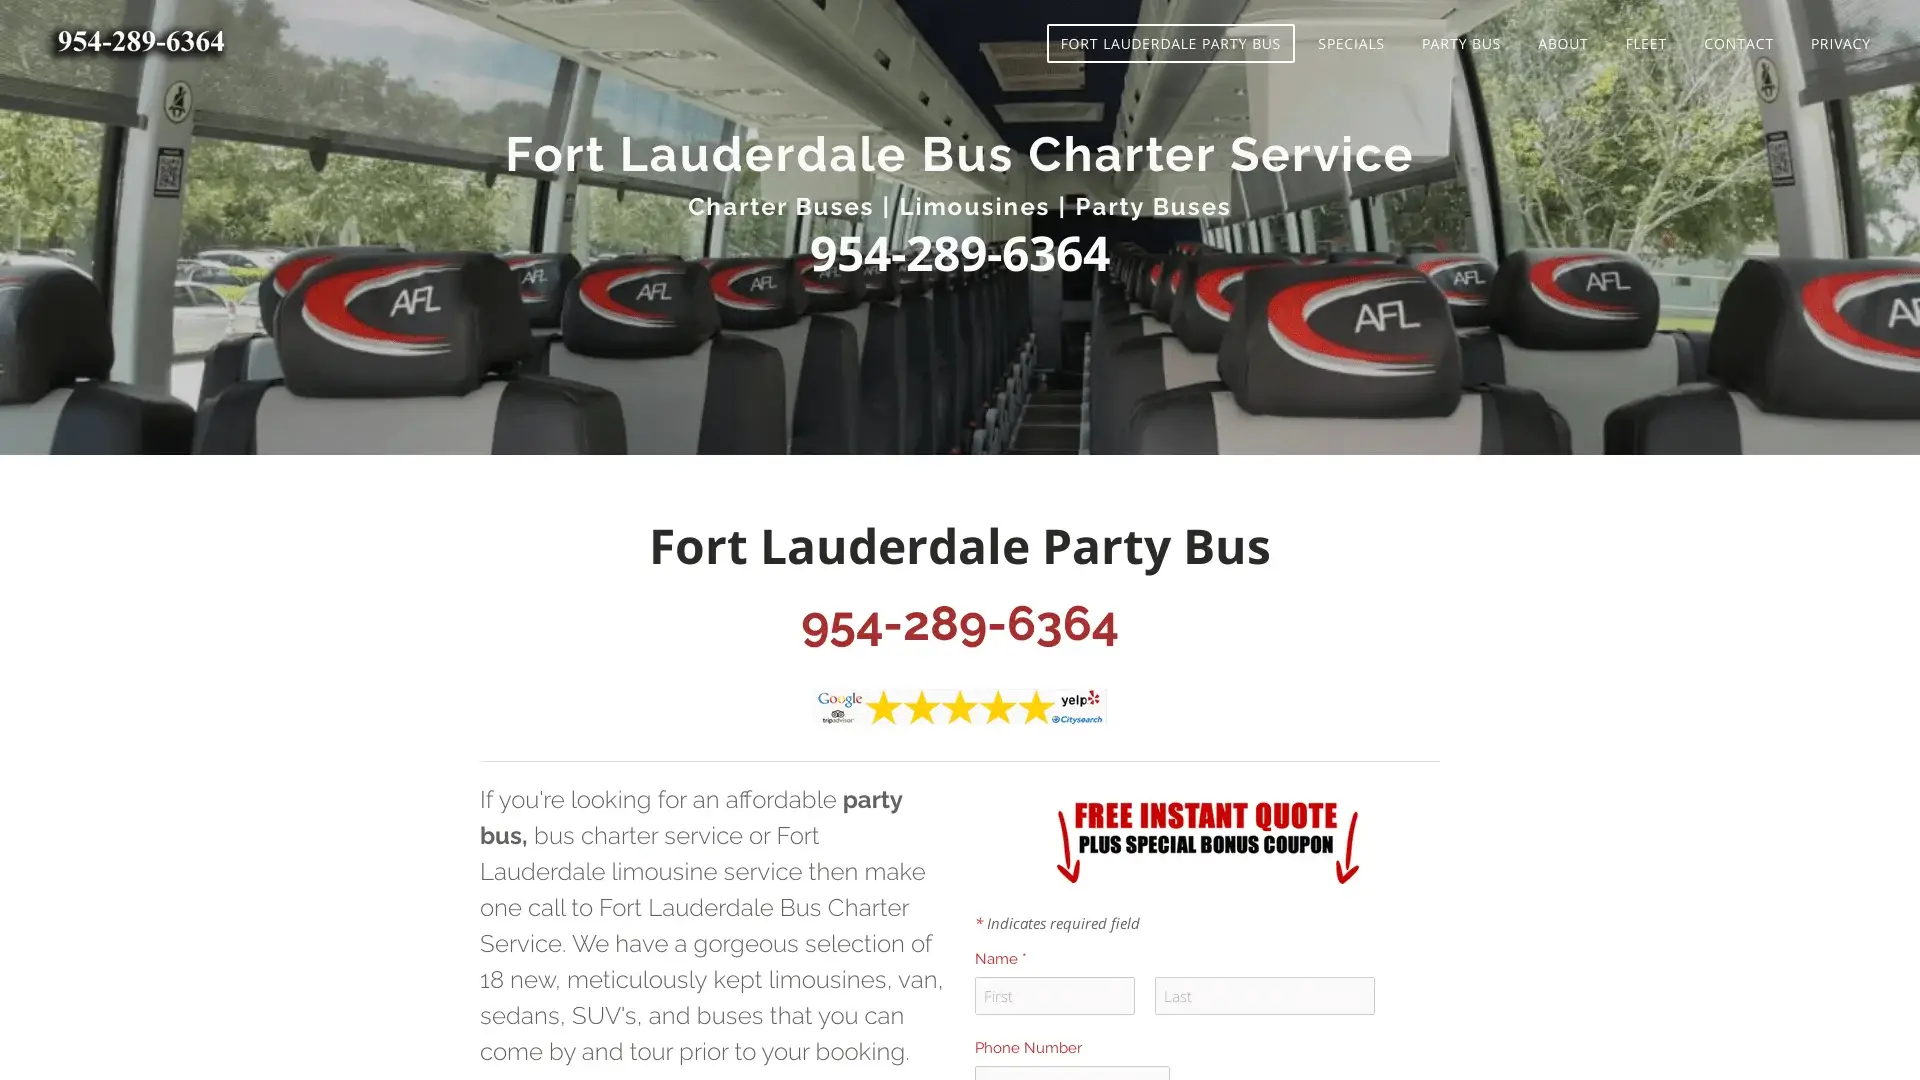 Fort Lauderdale Party Bus - Bus Charters - Fort Lauderdale, FL